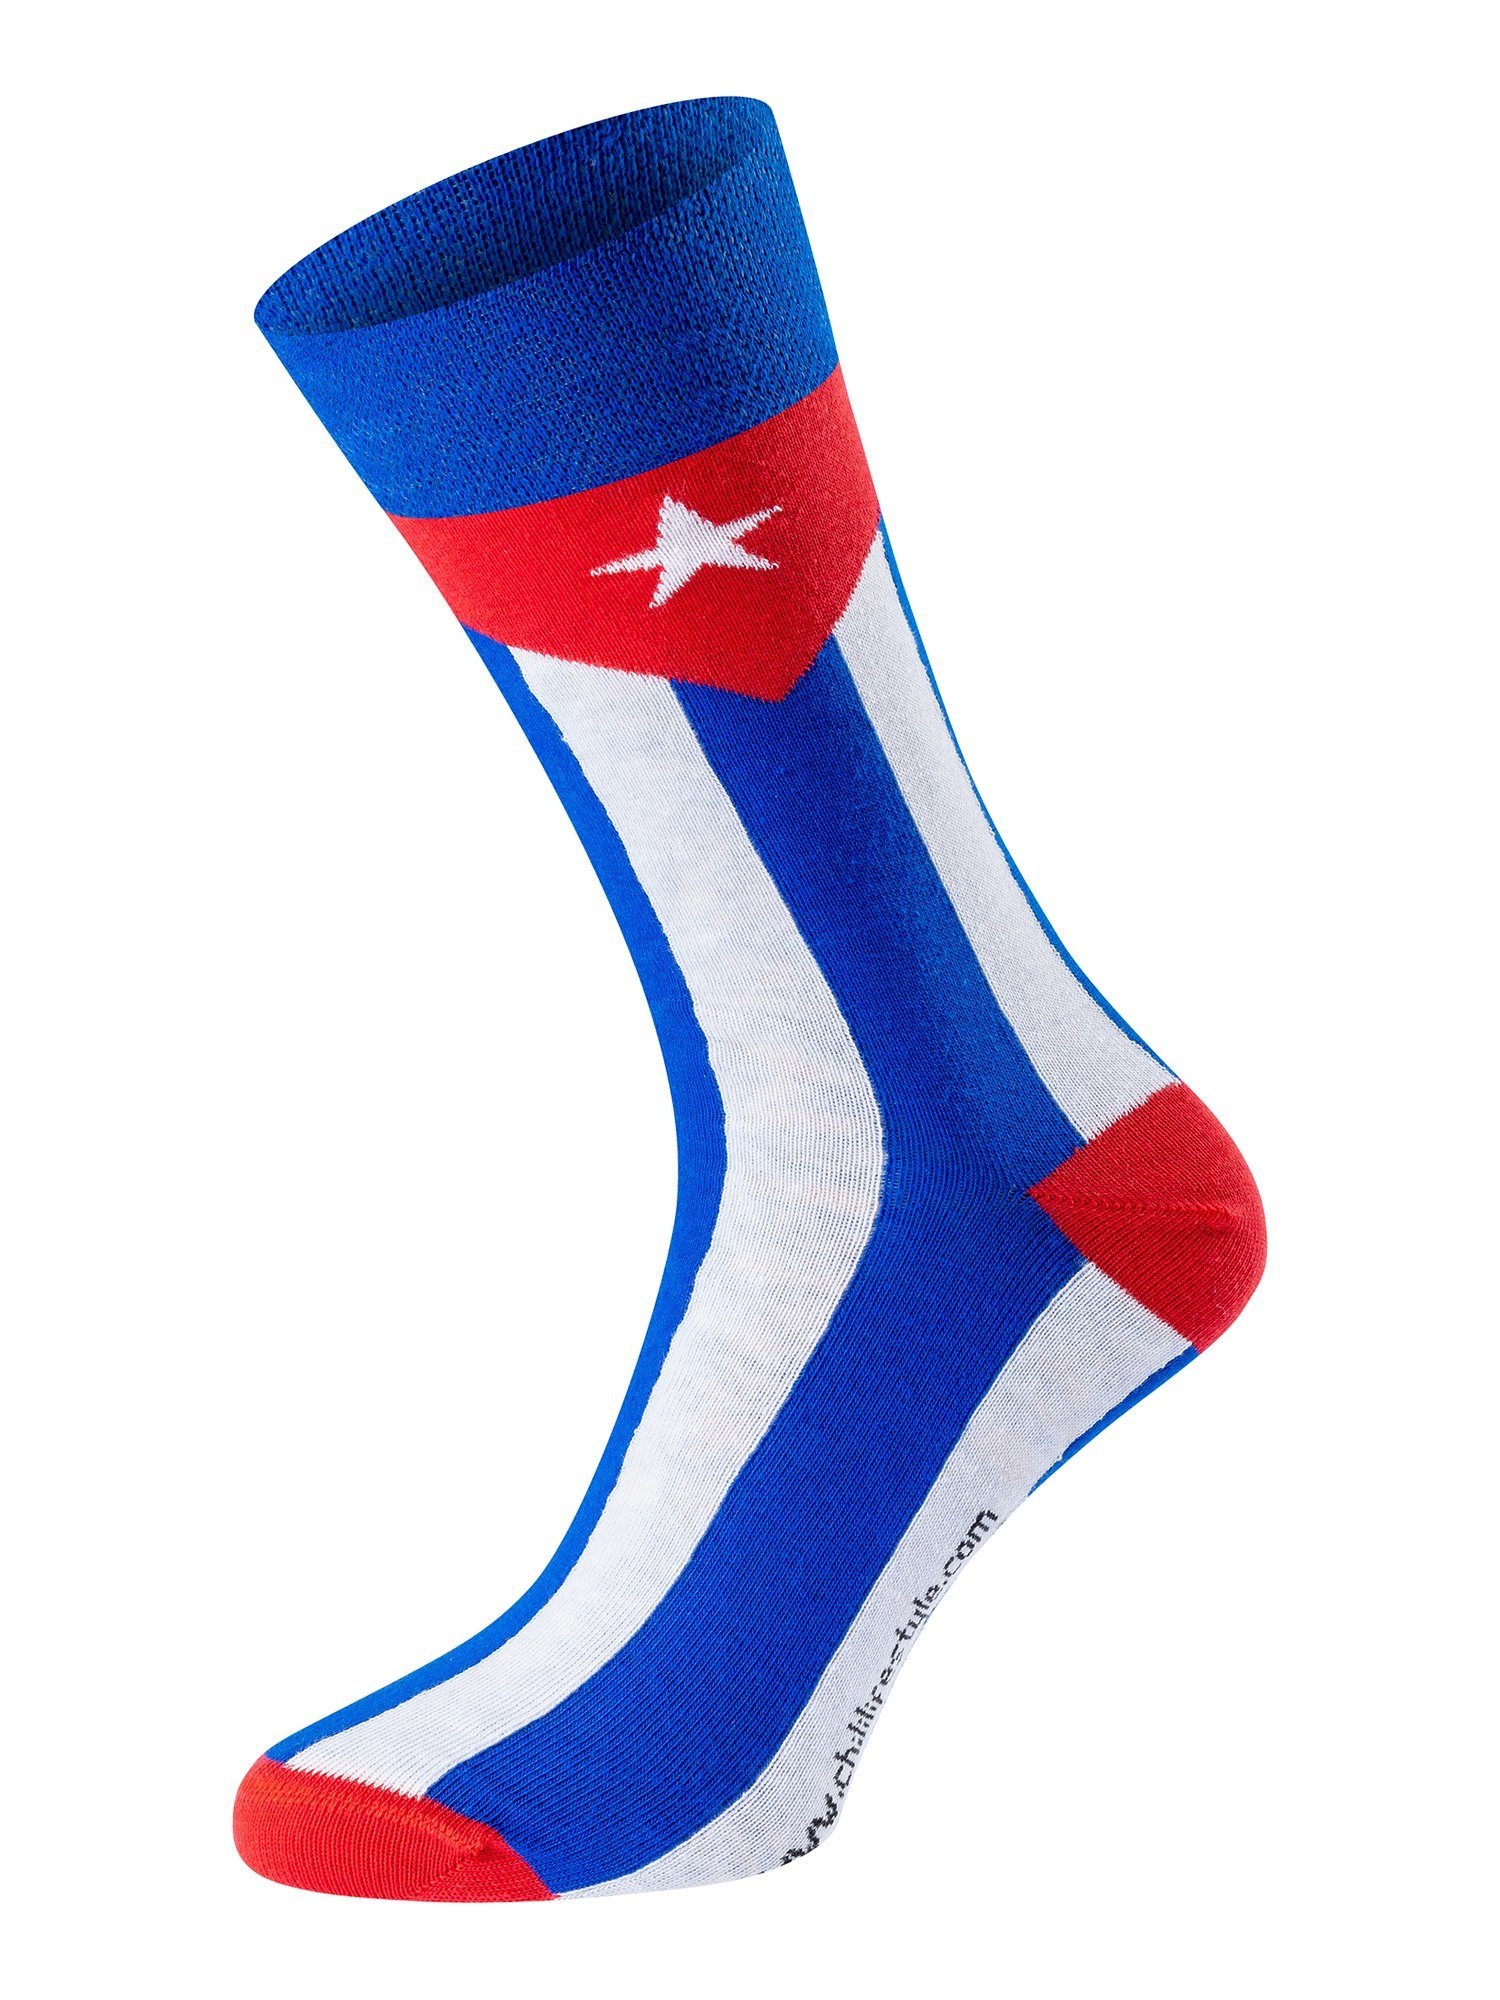 Chili Leisure Freizeitsocken Fidel Banderole Socks Lifestyle